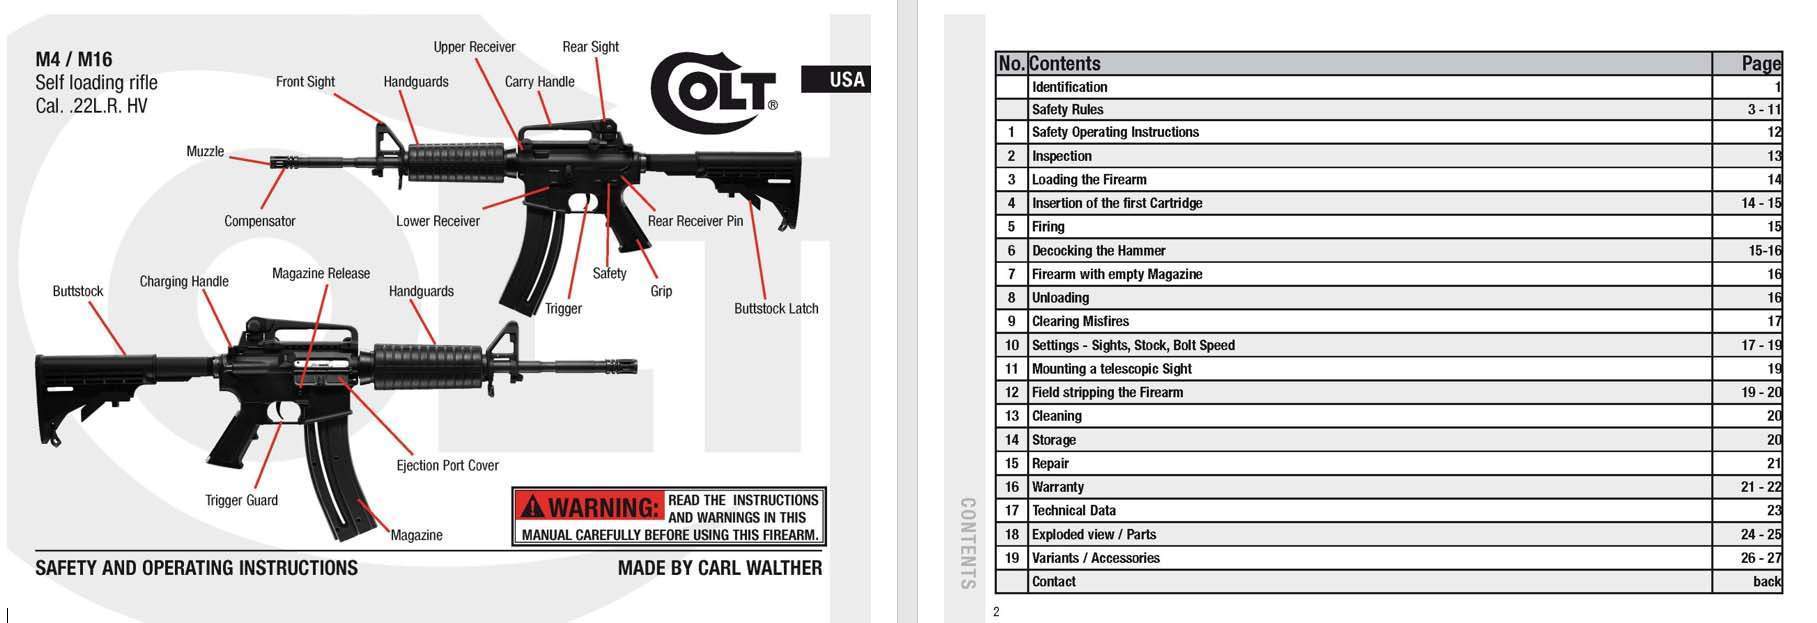 Colt-Walther M4&M16 .22LR HV SLR Manual 2009 Manual - GB-img-0